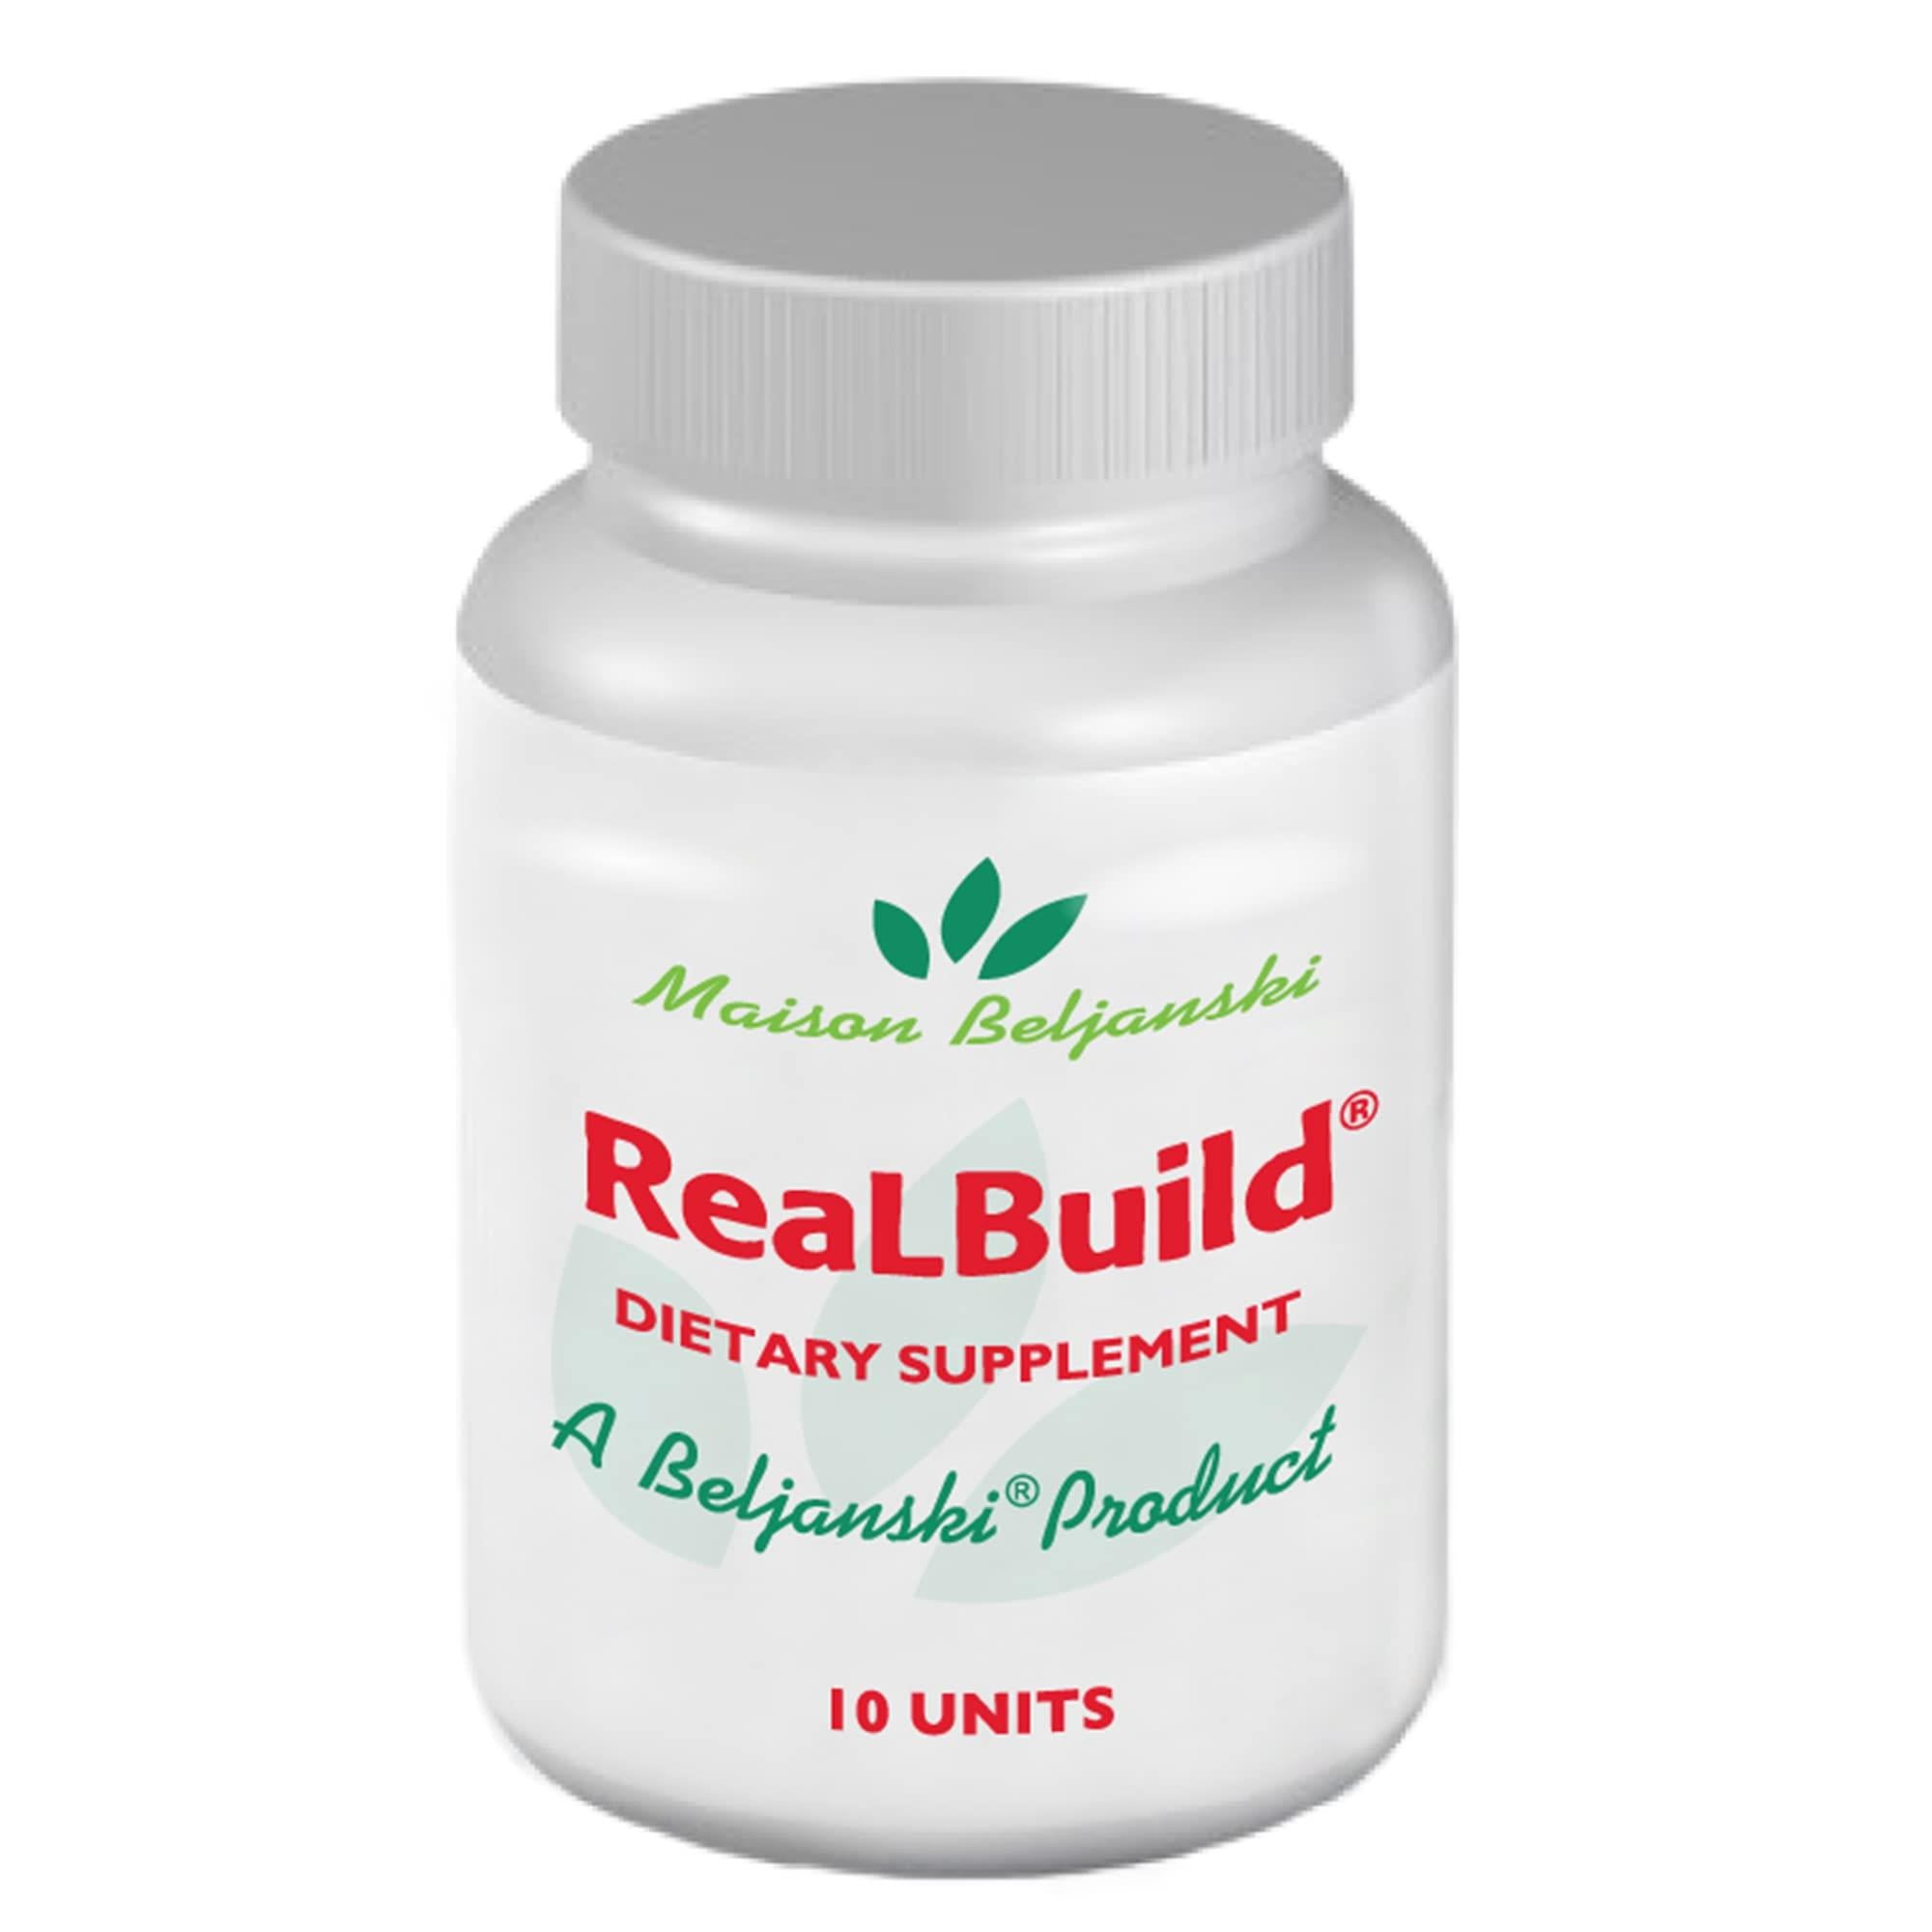 Beljanski® Products - ReaLBuild® - Immune Support Supplement - 10 Doses